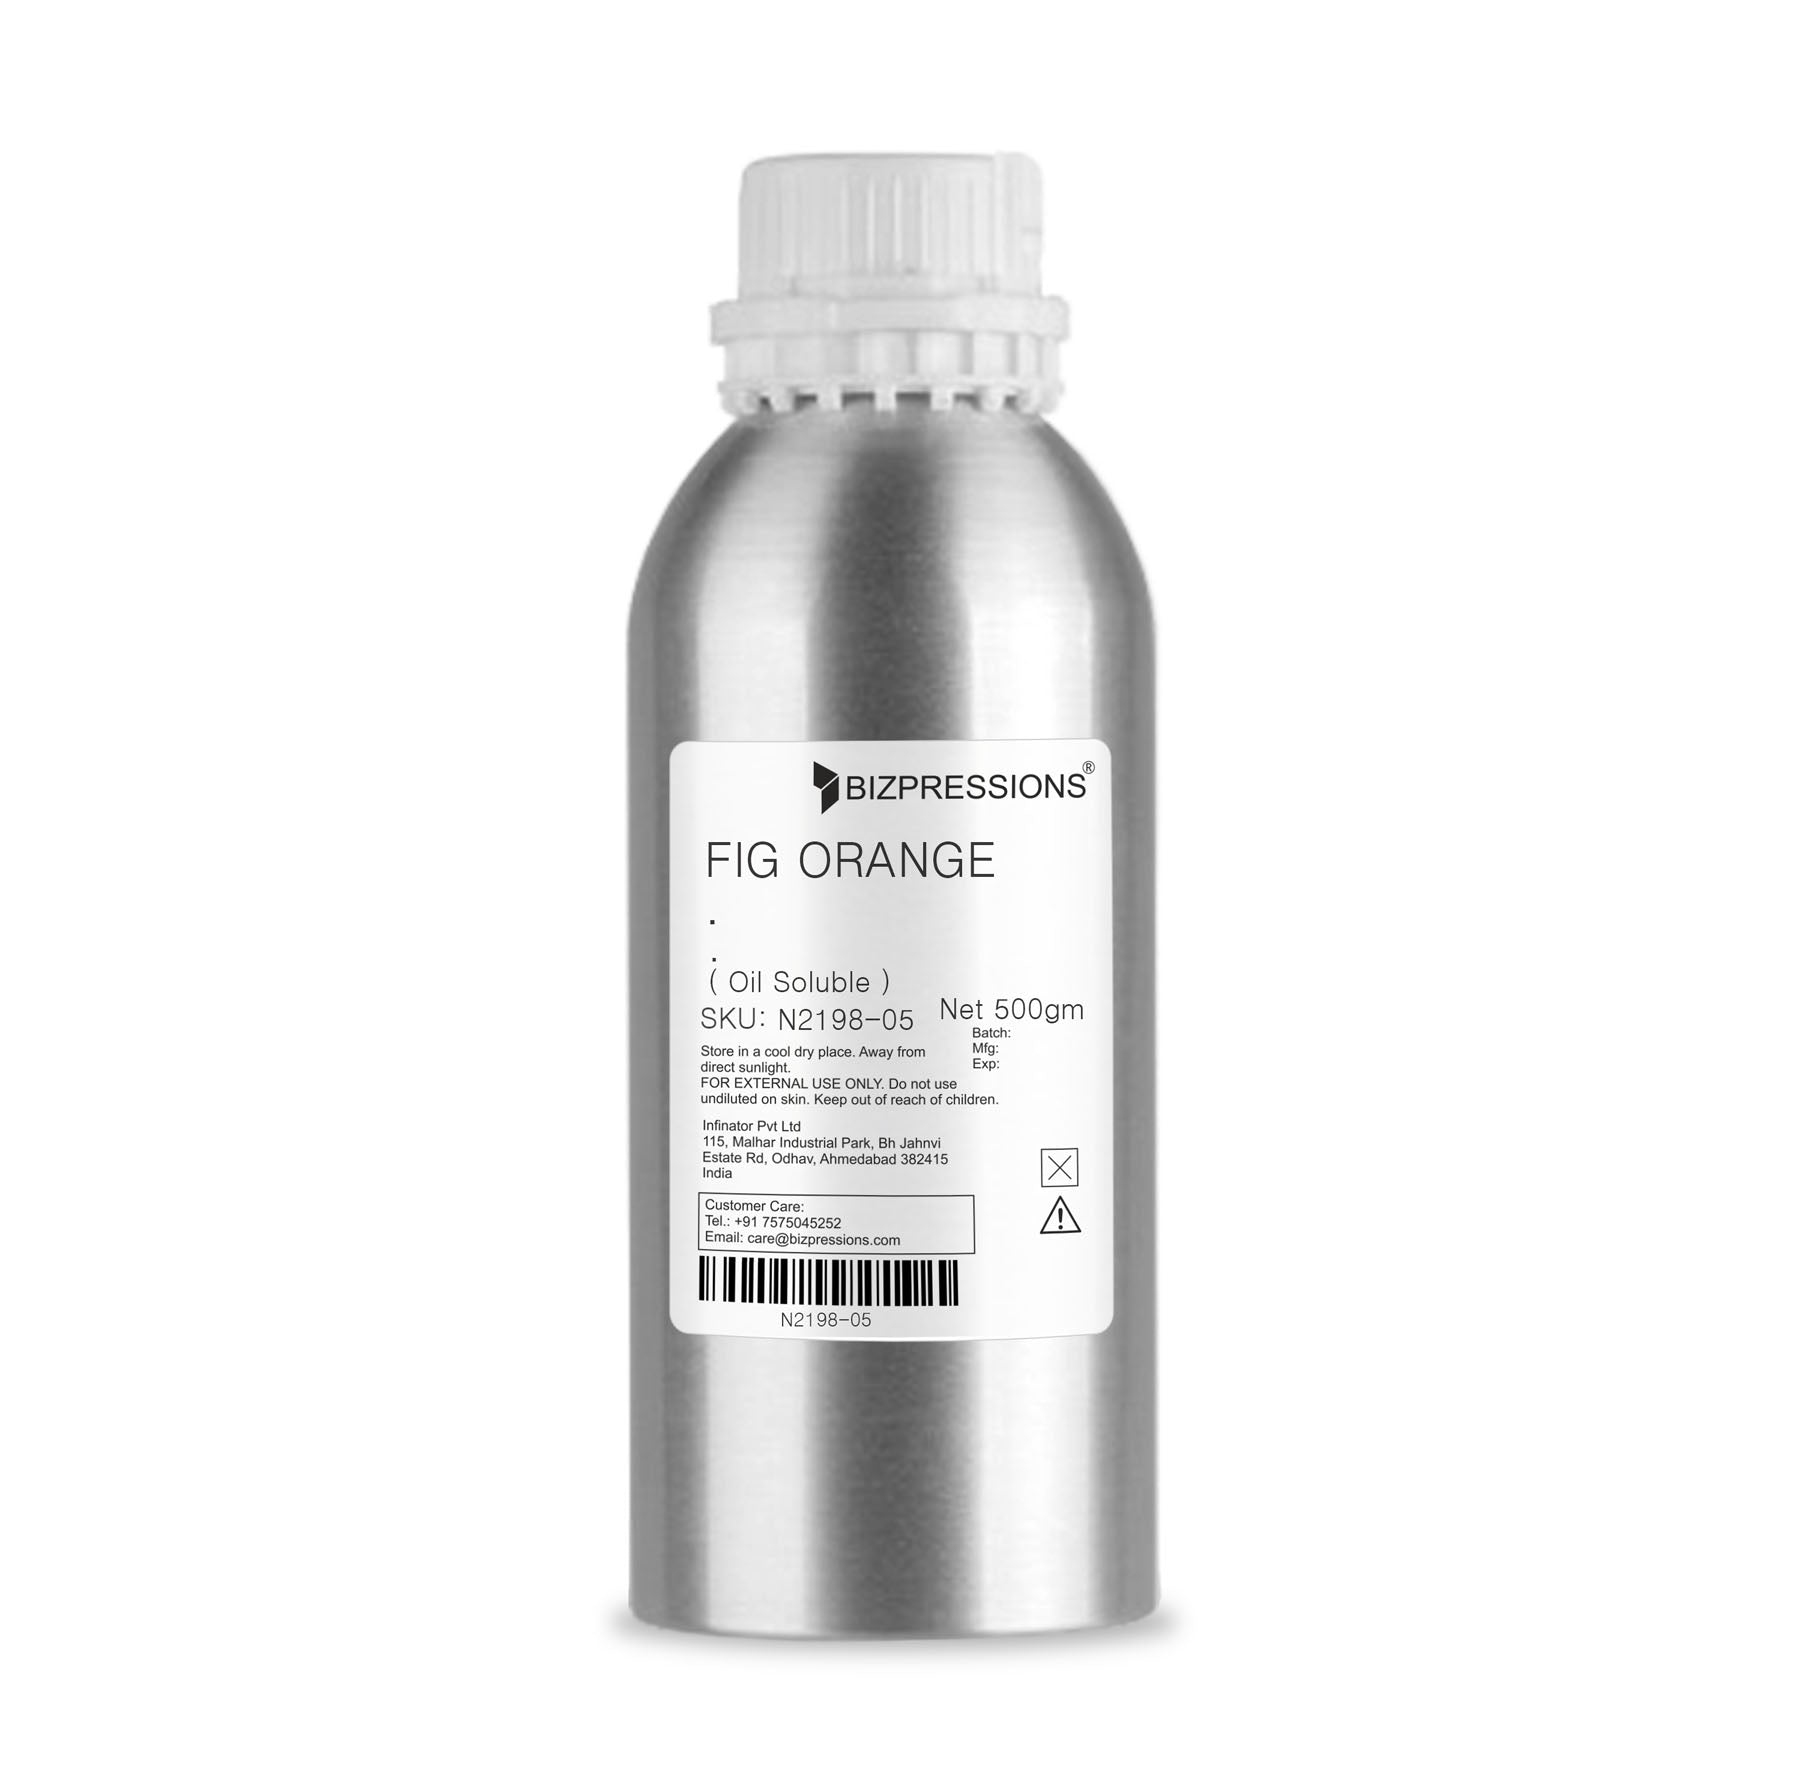 FIG ORANGE - Fragrance ( Oil Soluble ) - 500 gm